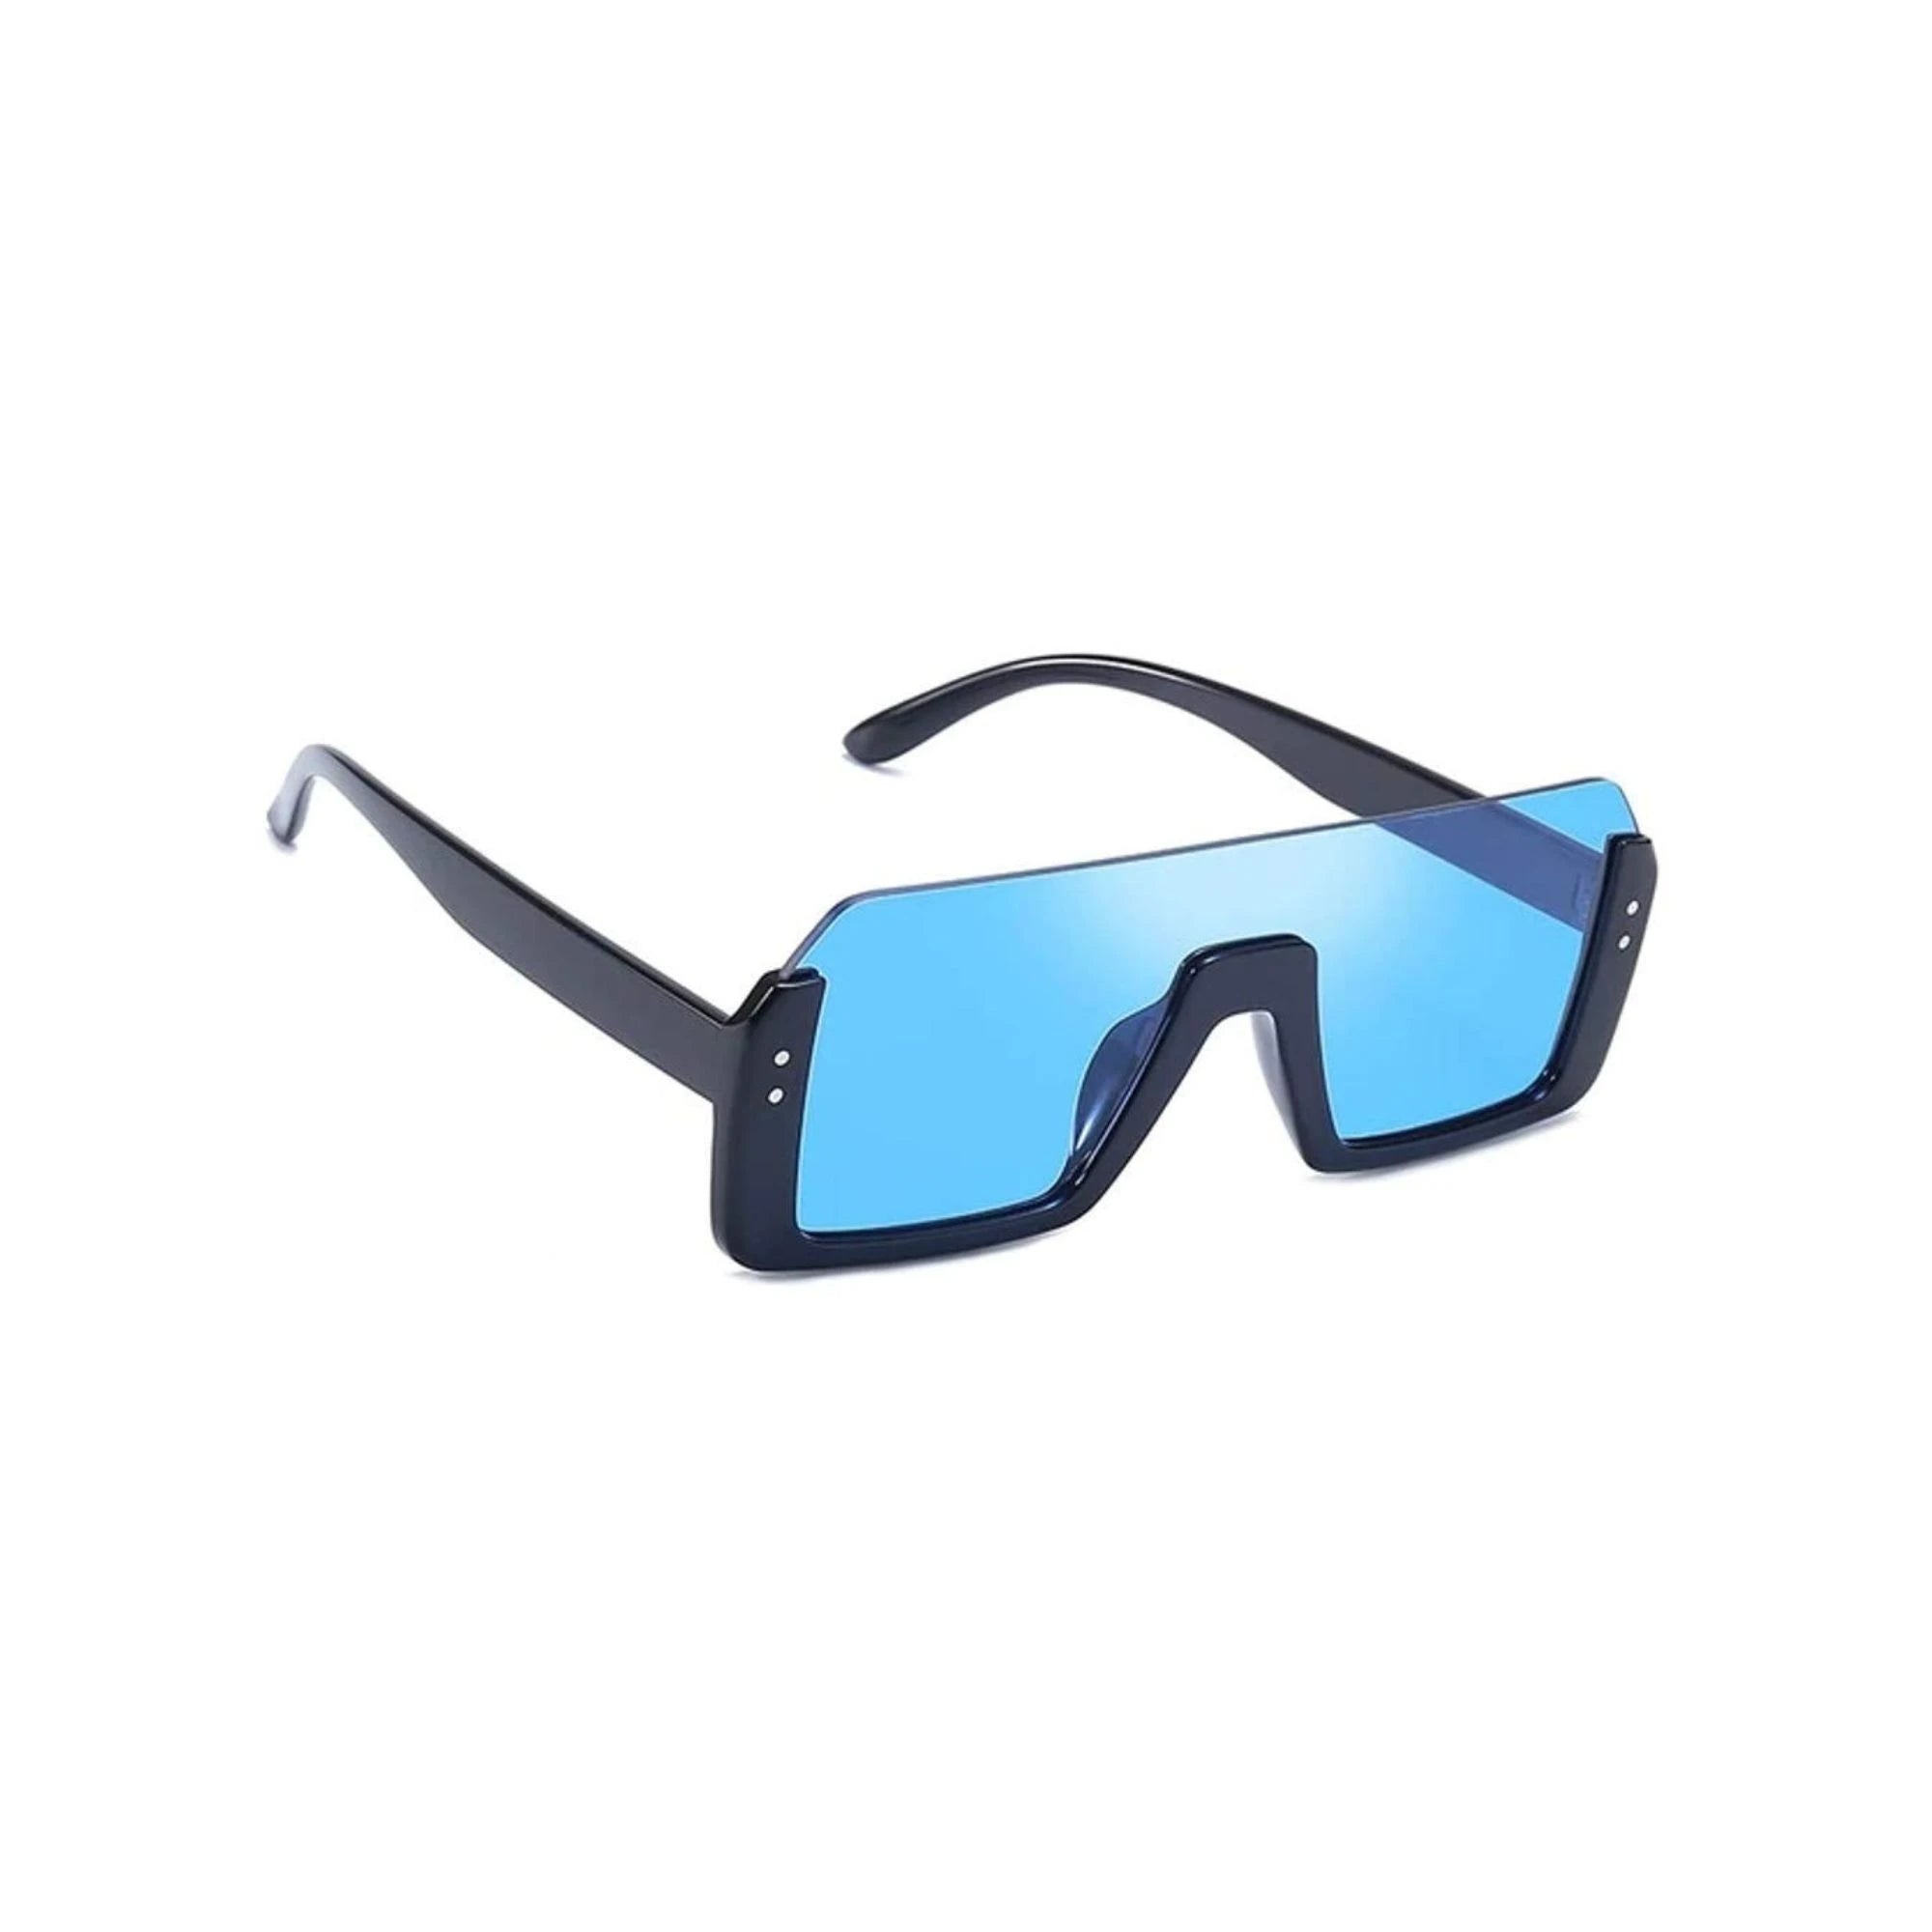 HautRim Series Half Rim Rectangular Sunglasses - Black Frame Blue Mirrored Lens